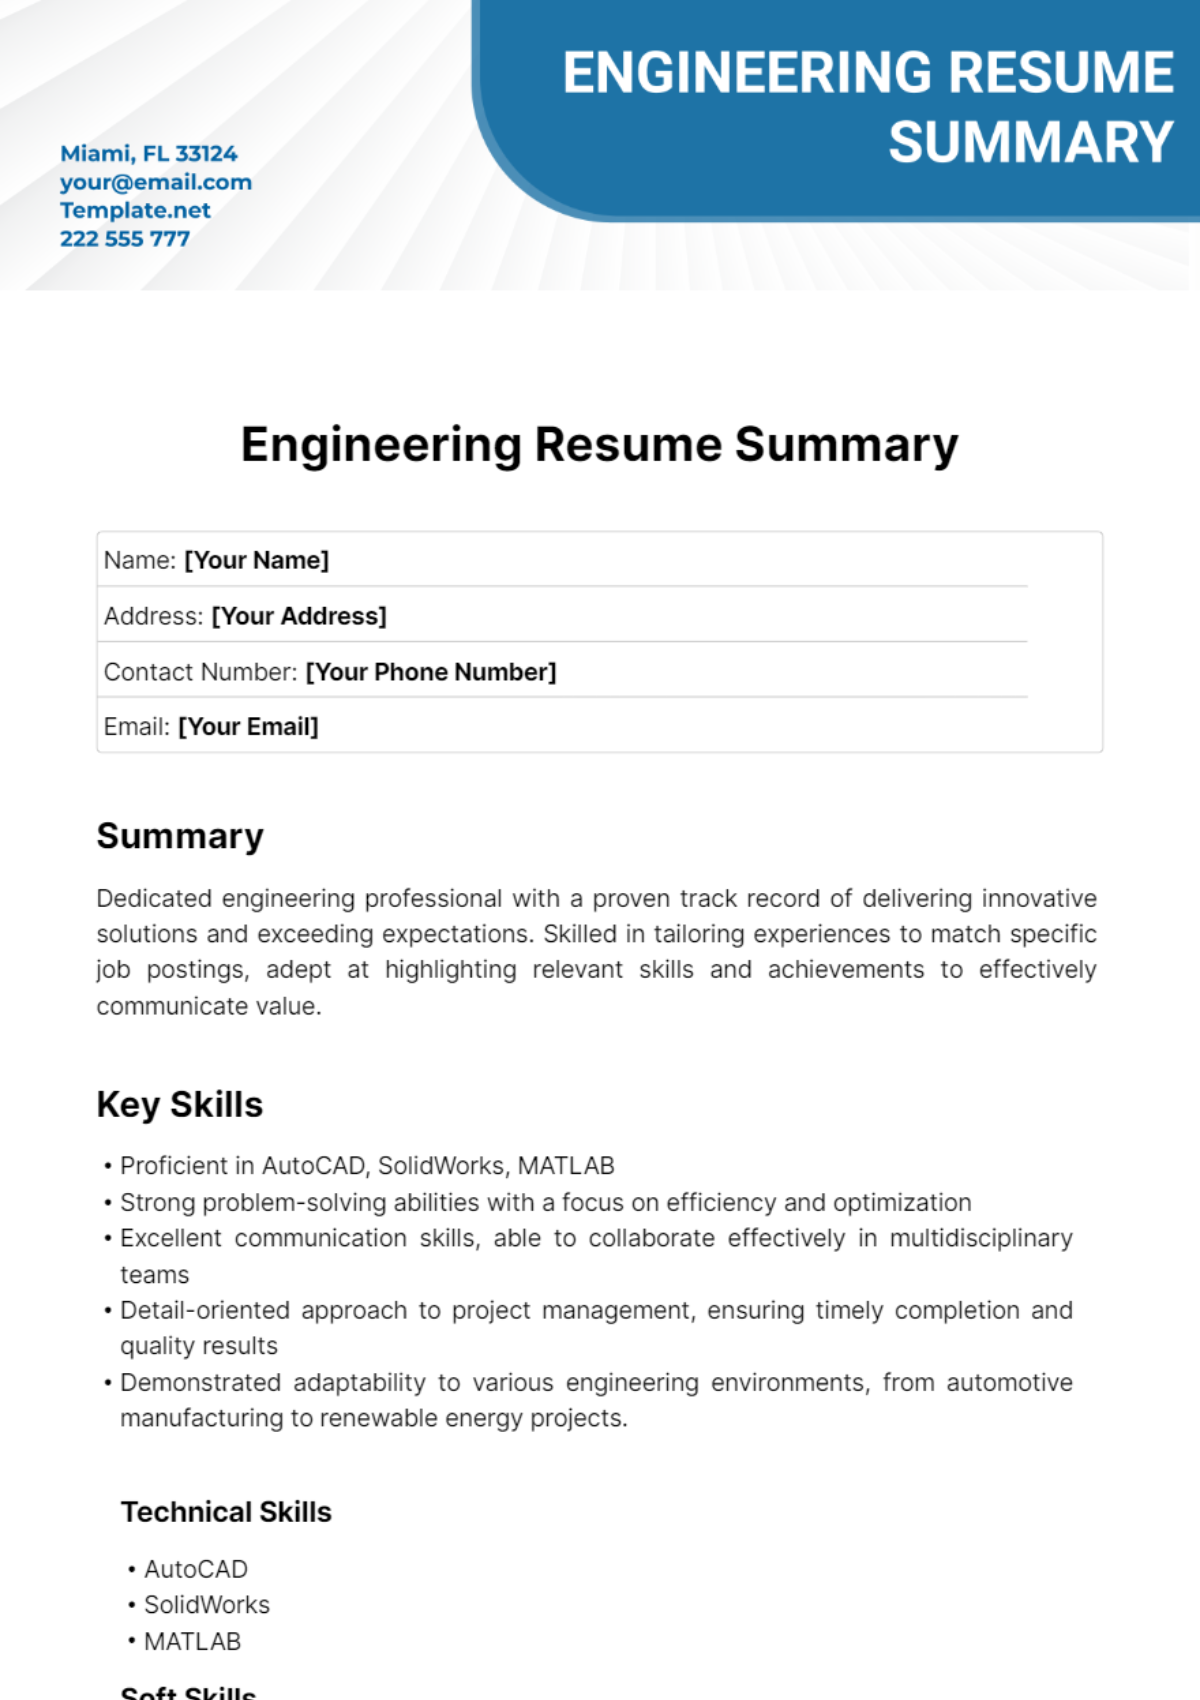 Engineering Resume Summary Template